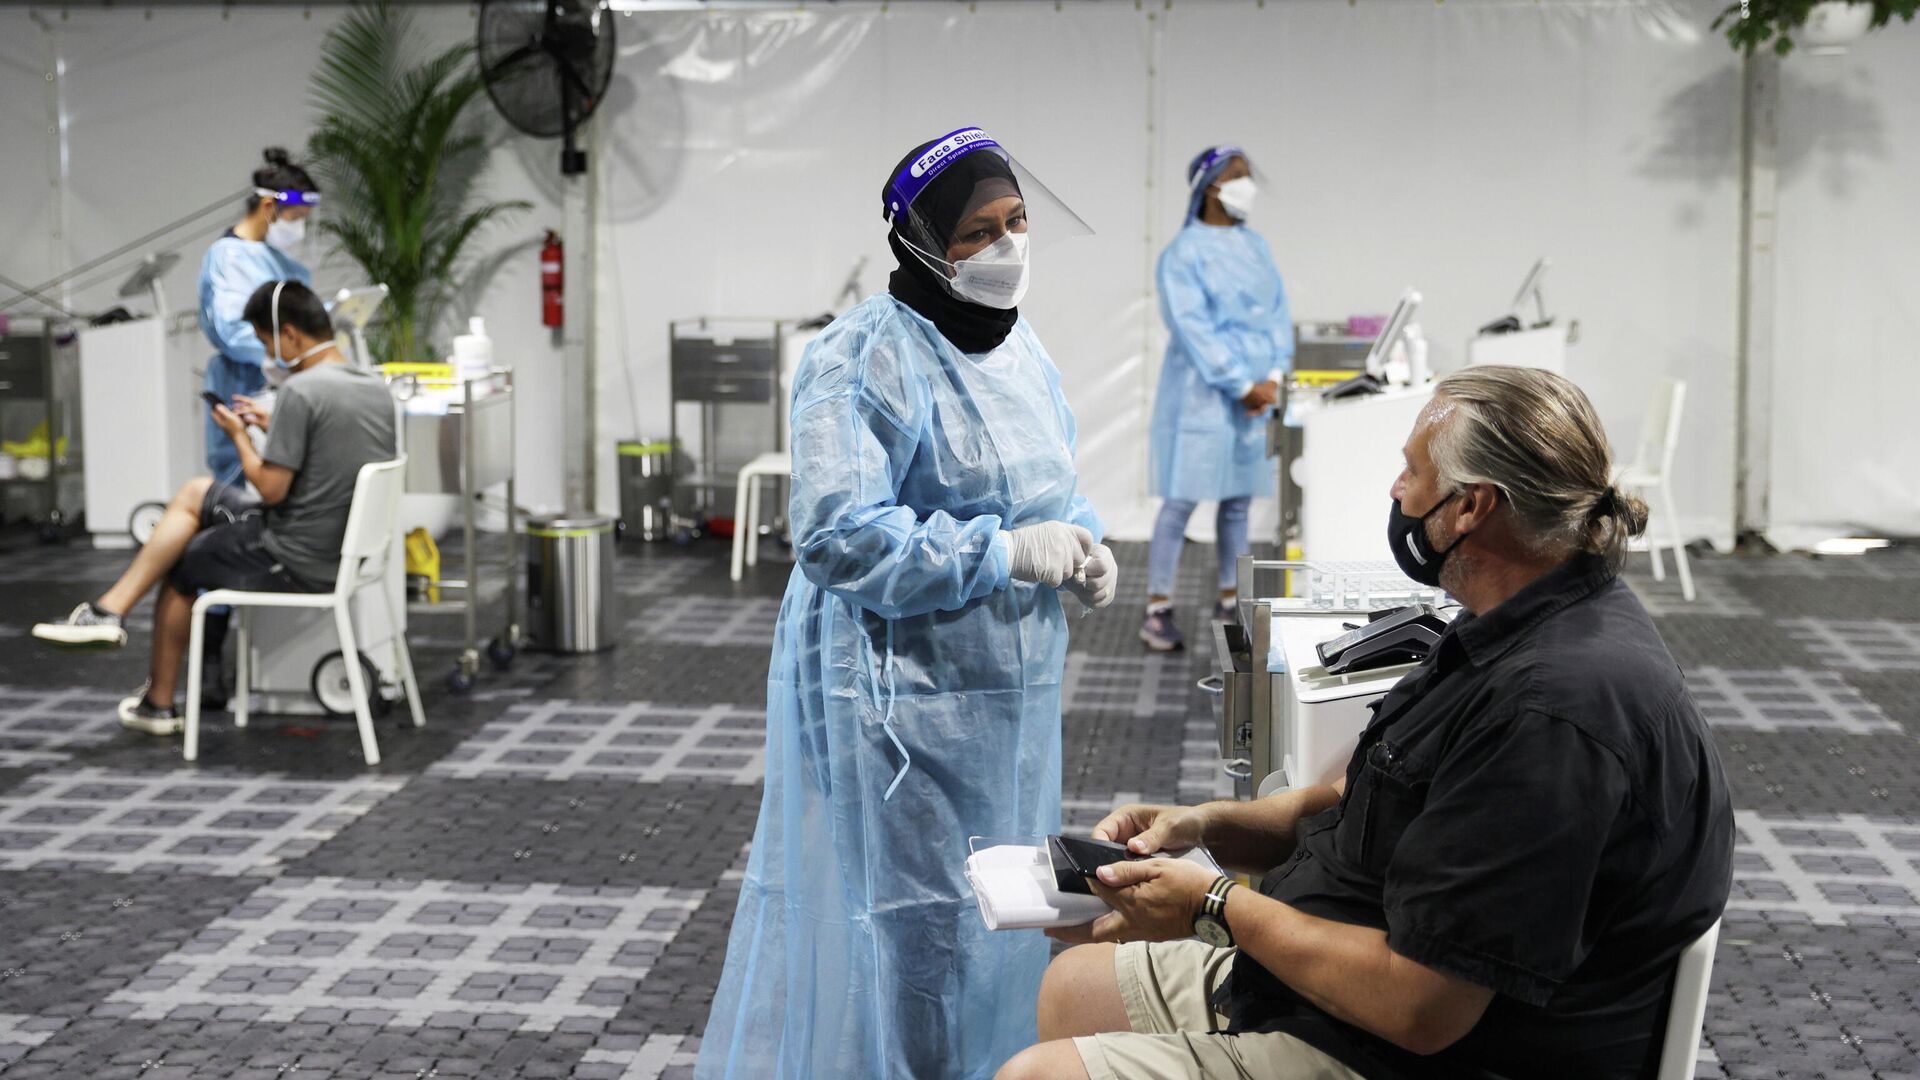 Путешественники проходят тесты на коронавирус (COVID-19) в аэропорту Сиднея - РИА Новости, 1920, 29.11.2021